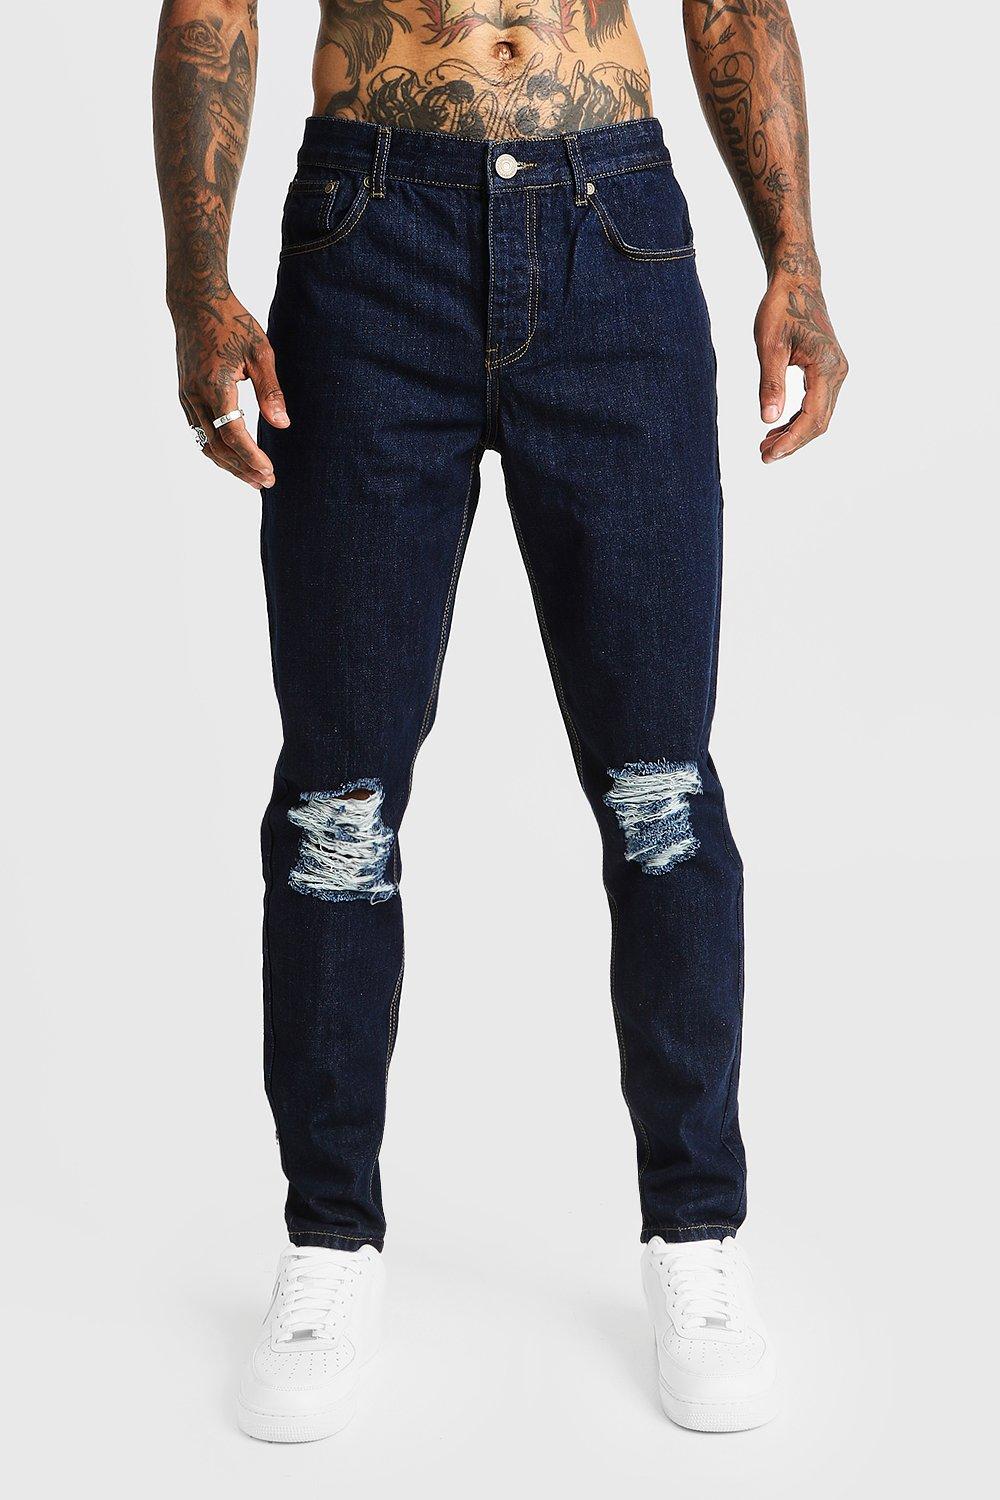 blue denim jeans ripped